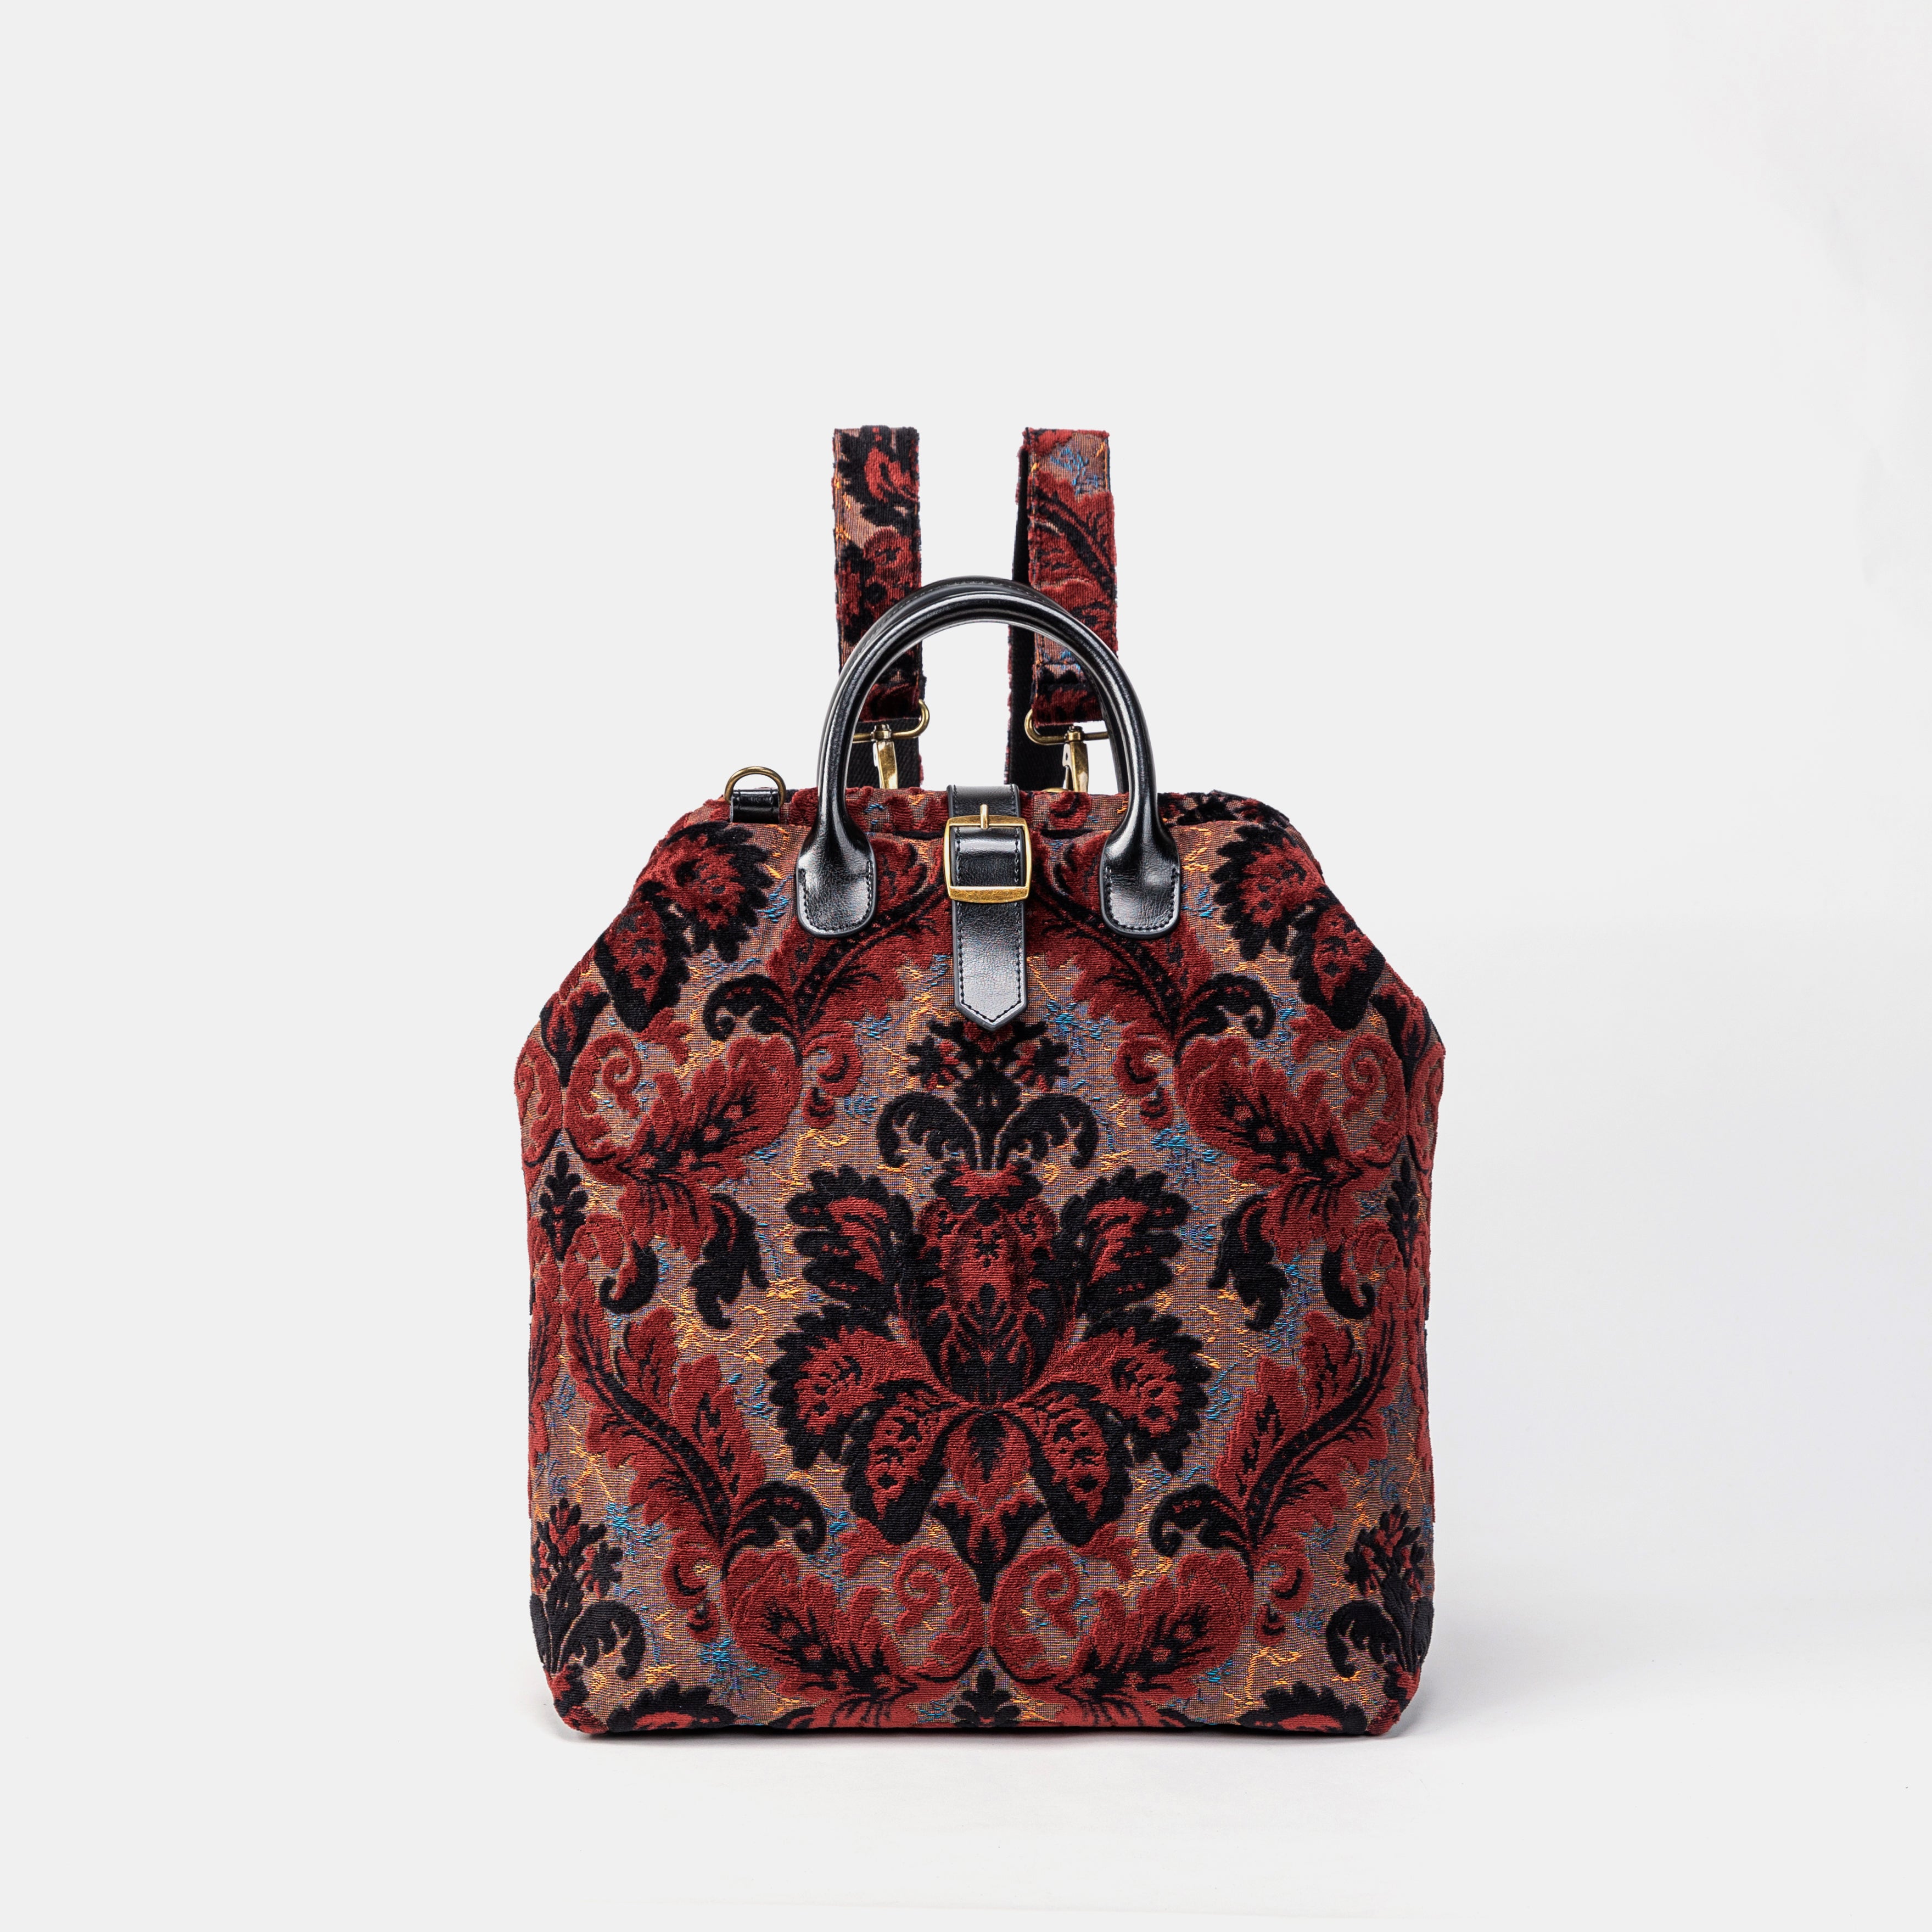 Revival Sephia Carpet Laptop Backpack Mary Poppins Bag front